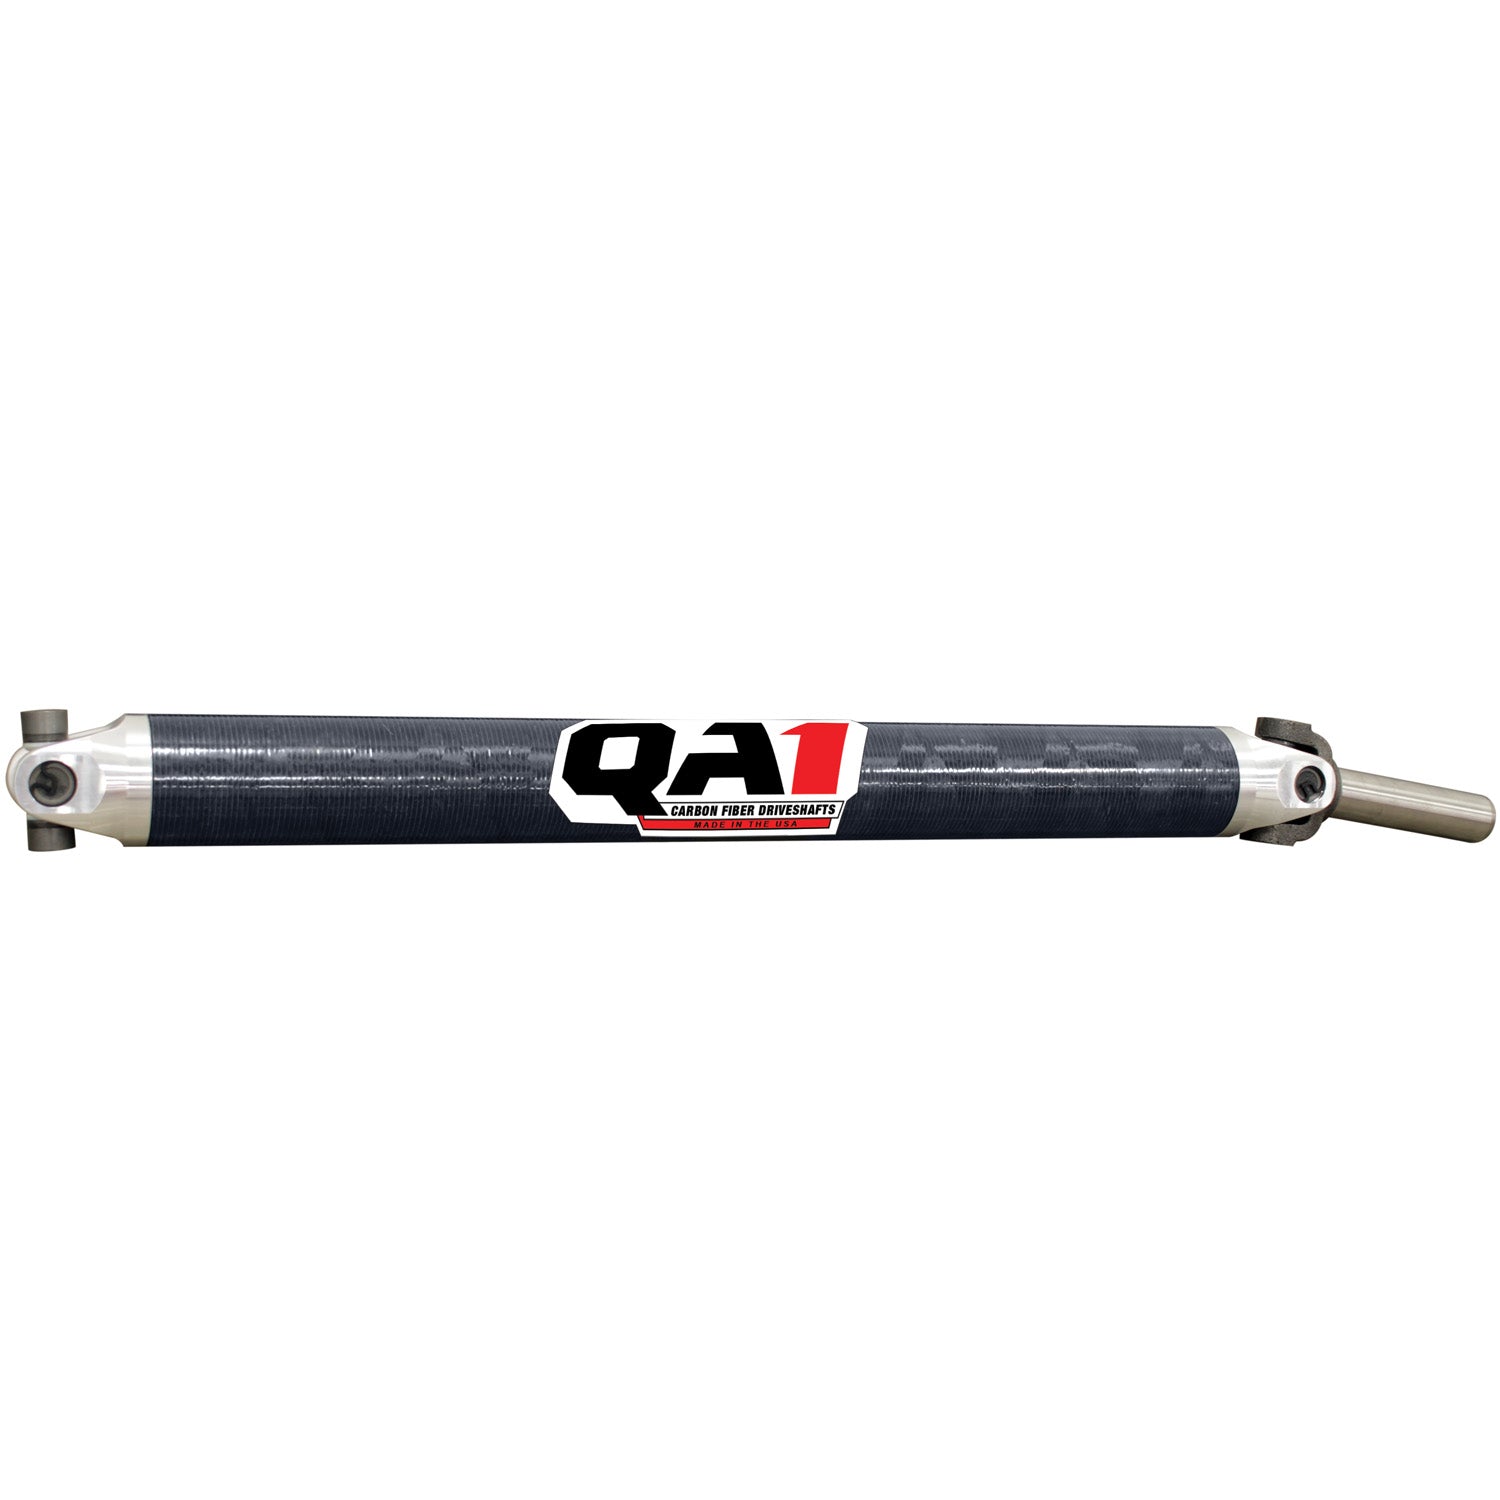 QA1 JJ-11225 Driveshaft, Cf, Ct-Dirt LM, Sy 37.00 XM 3.2, 1310 U-Joint, Gm 27Sp, 8